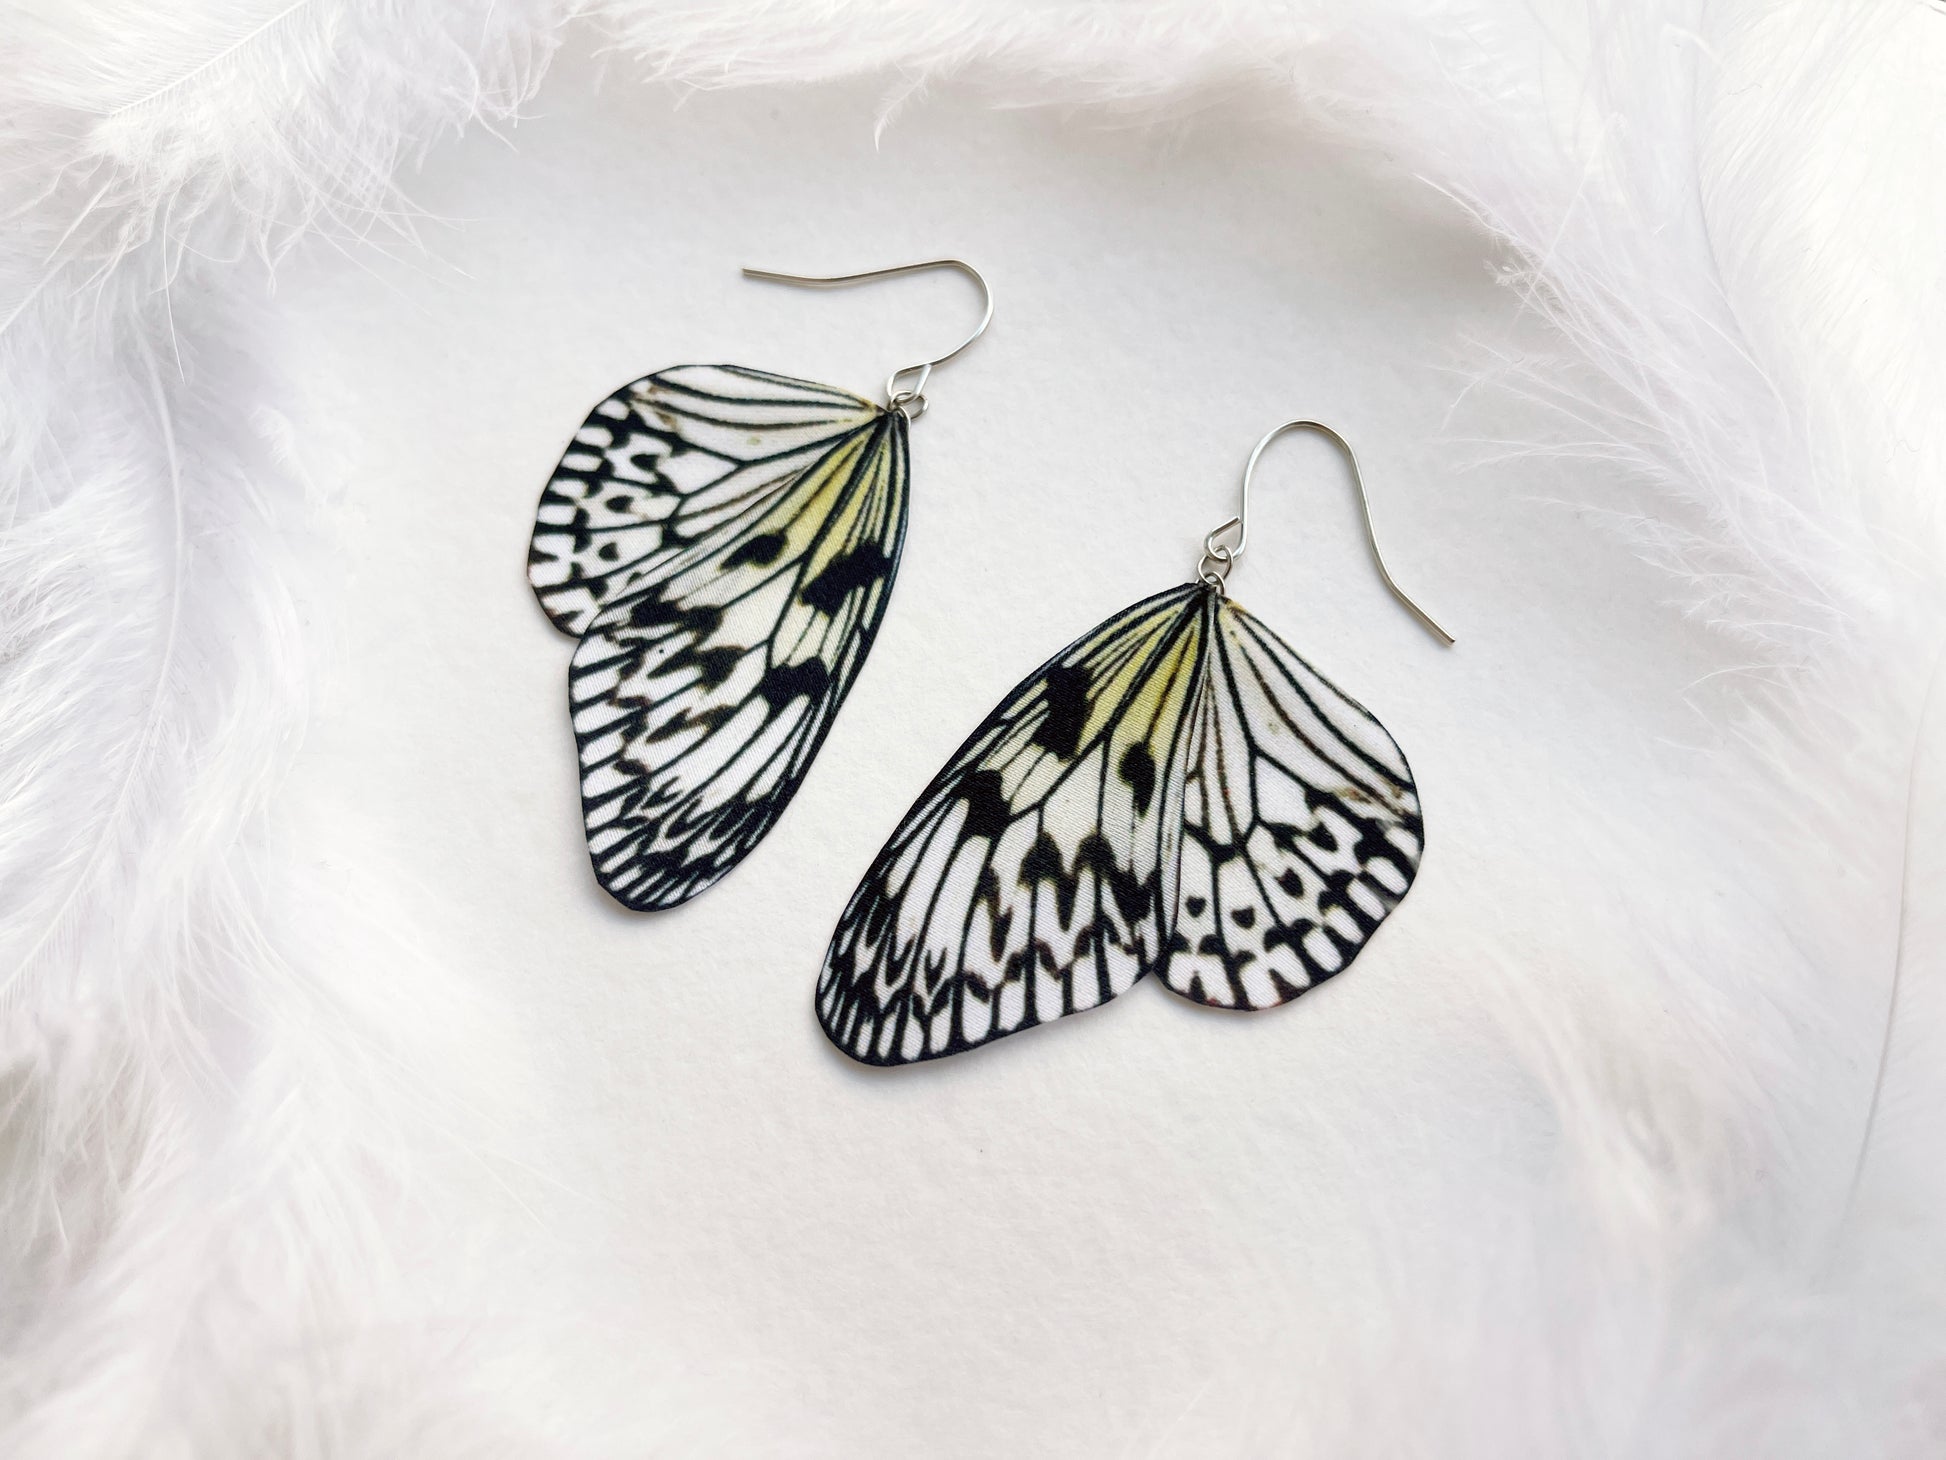 Whimsical Paper Kite Butterfly Earrings in Boho Fashion